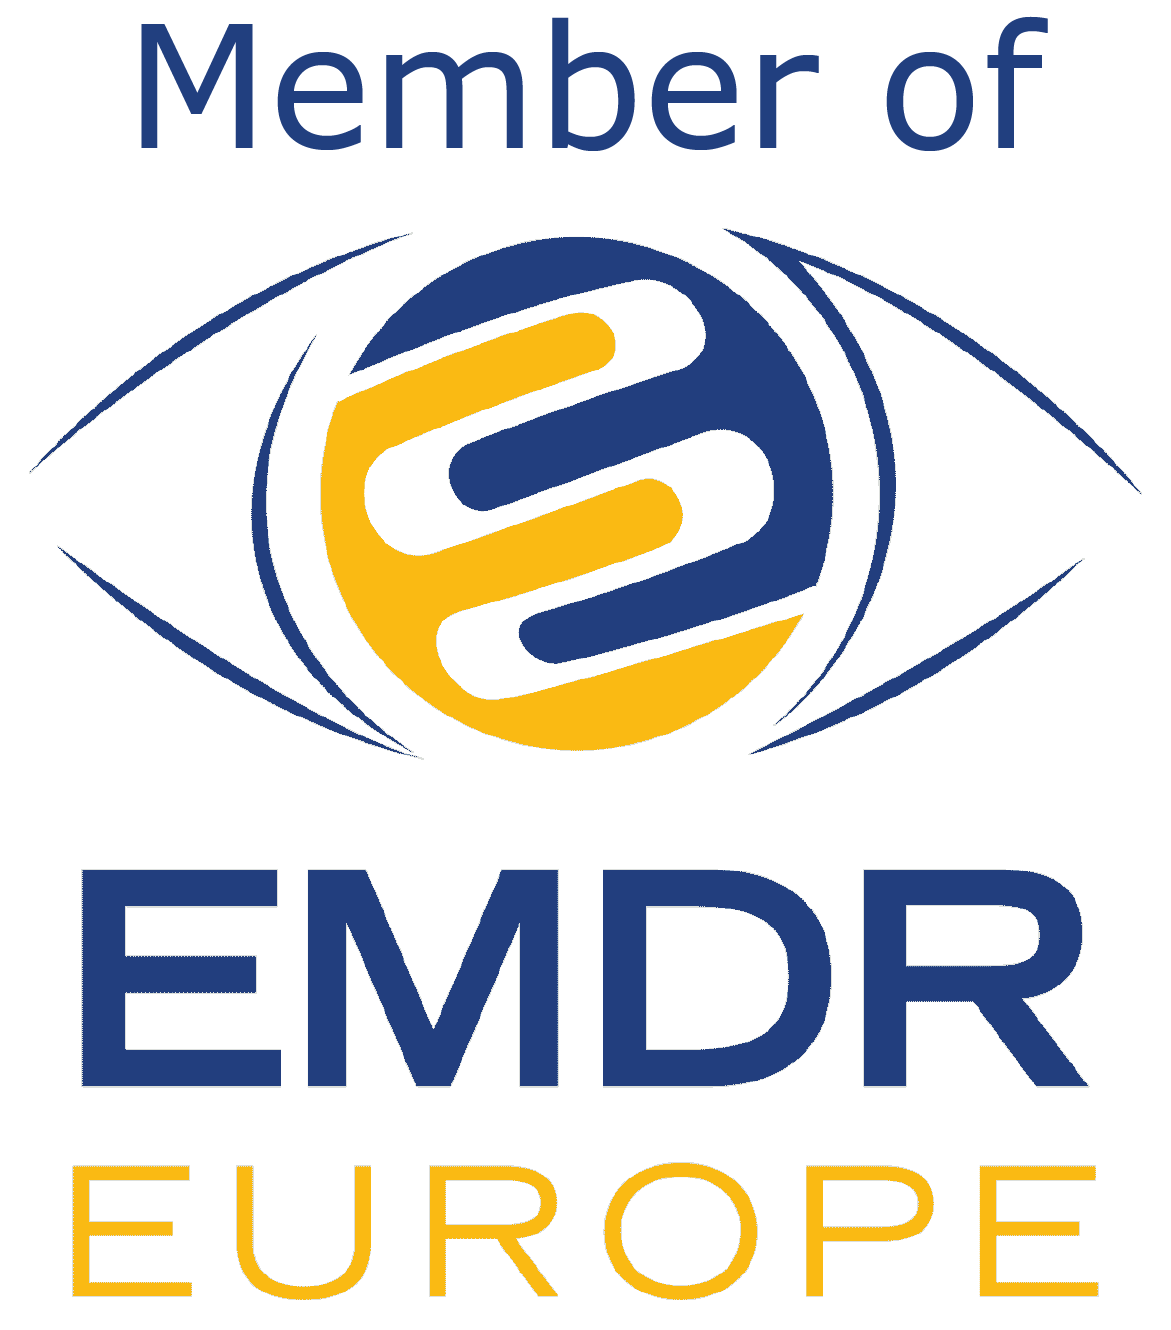 EMDR Europe